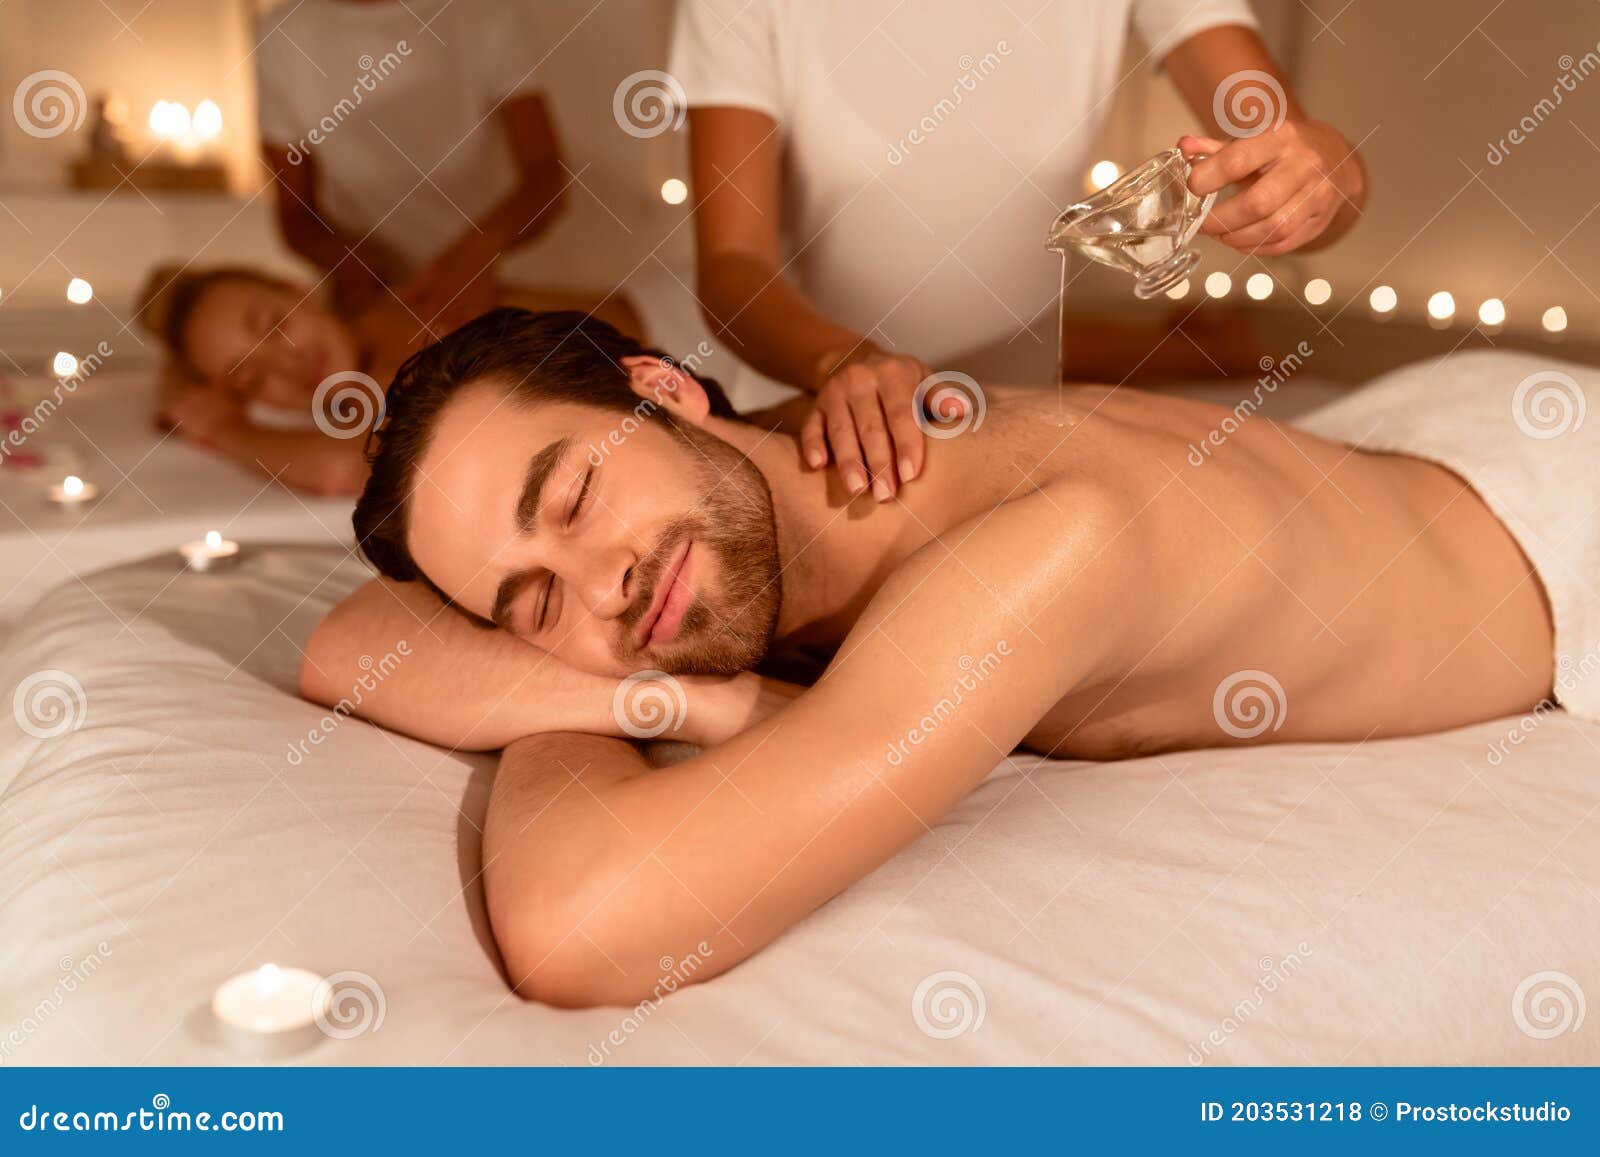 237 Couples Massage Stock Photos